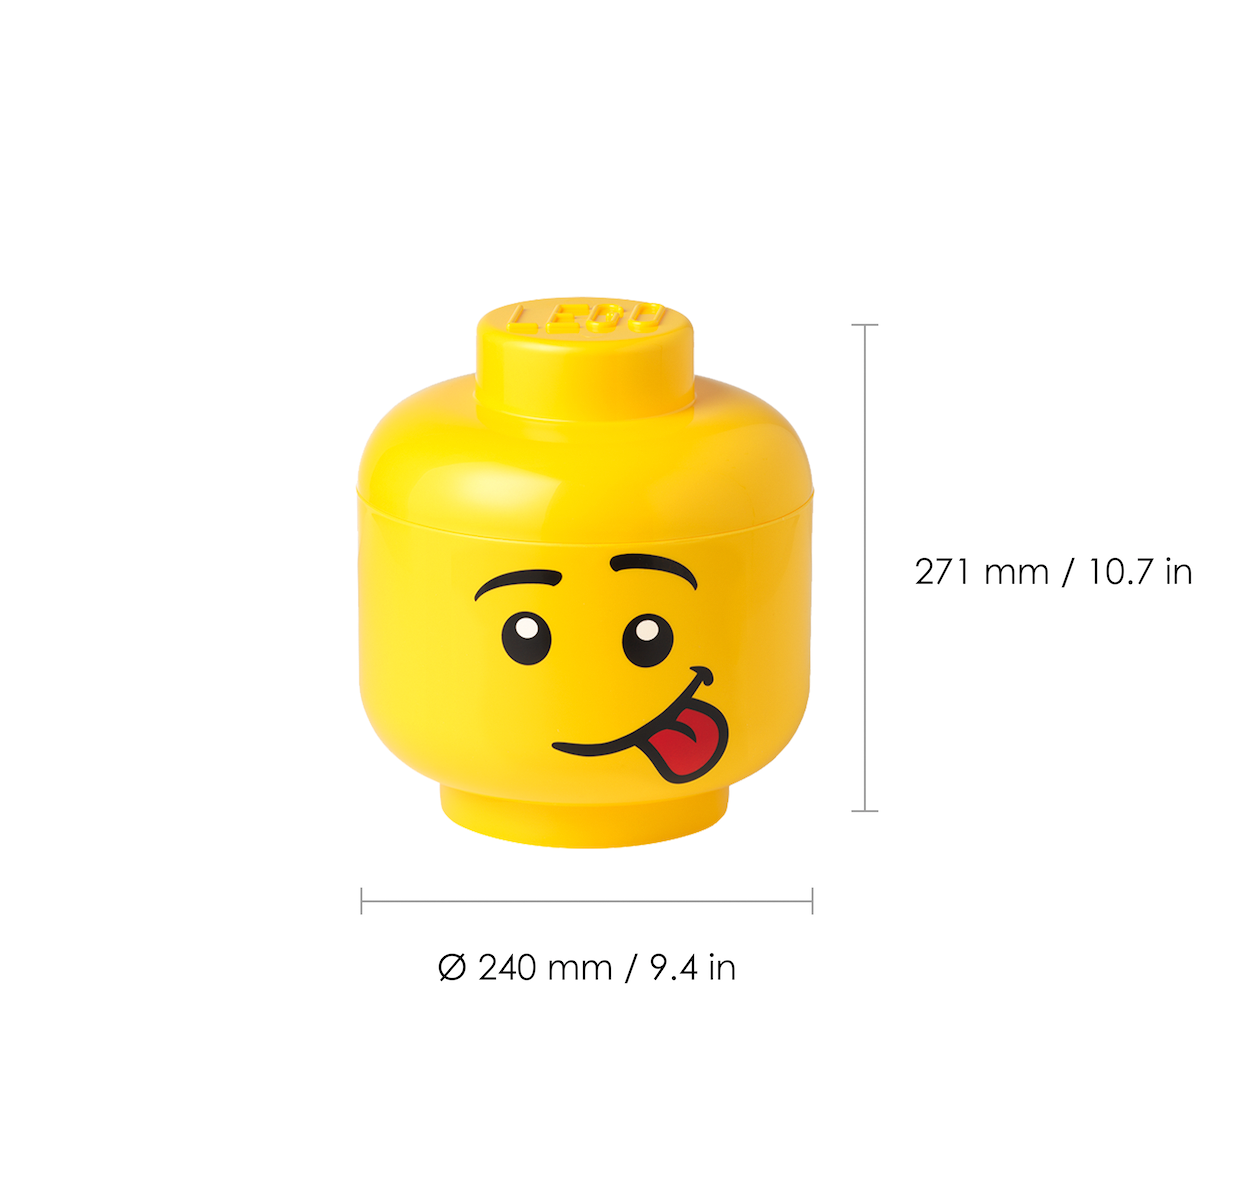 Lego Storage Head S Stackable & Fits Lego Storage Bricks For More Storage Fun